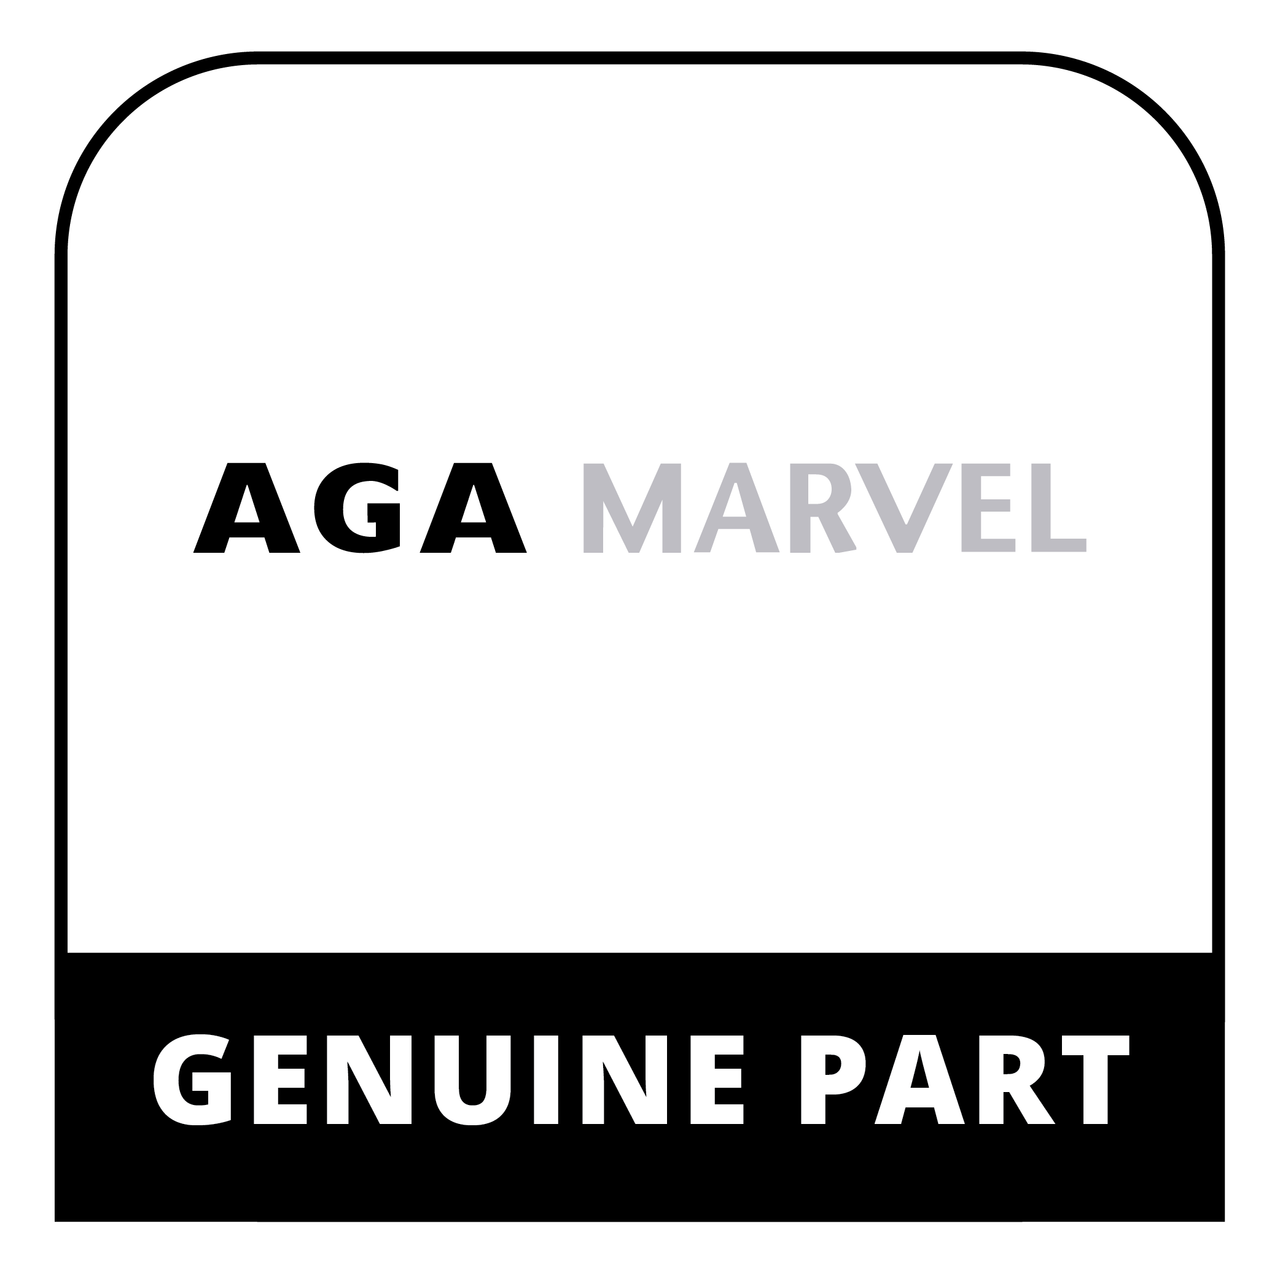 AGA Marvel AG4M260563 - Injector(T/Nipple) 1.08 N/G - Genuine AGA Marvel Part